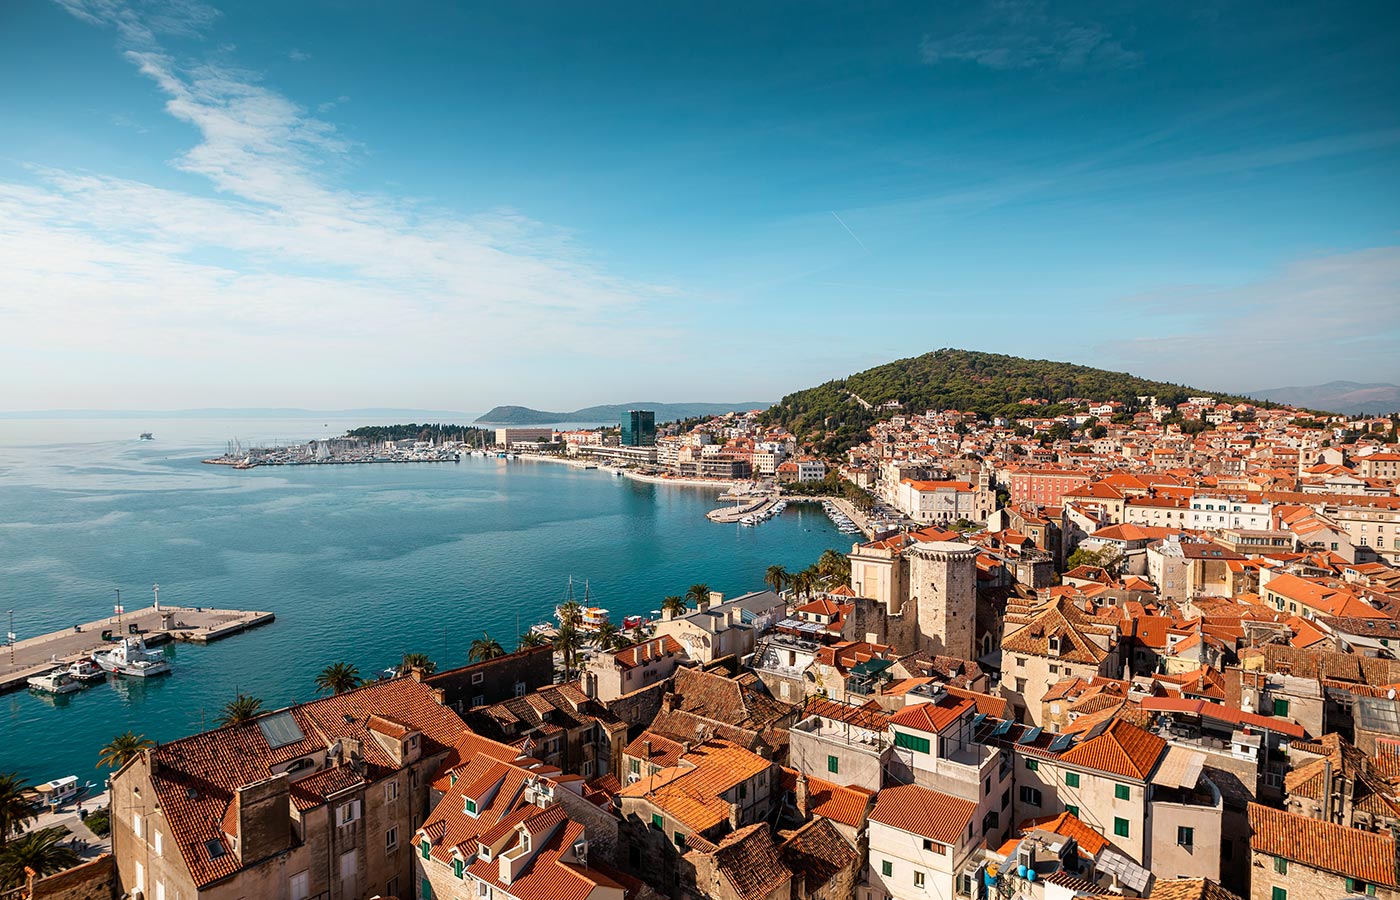 Split is one of Croatia's most popular tourist destinations